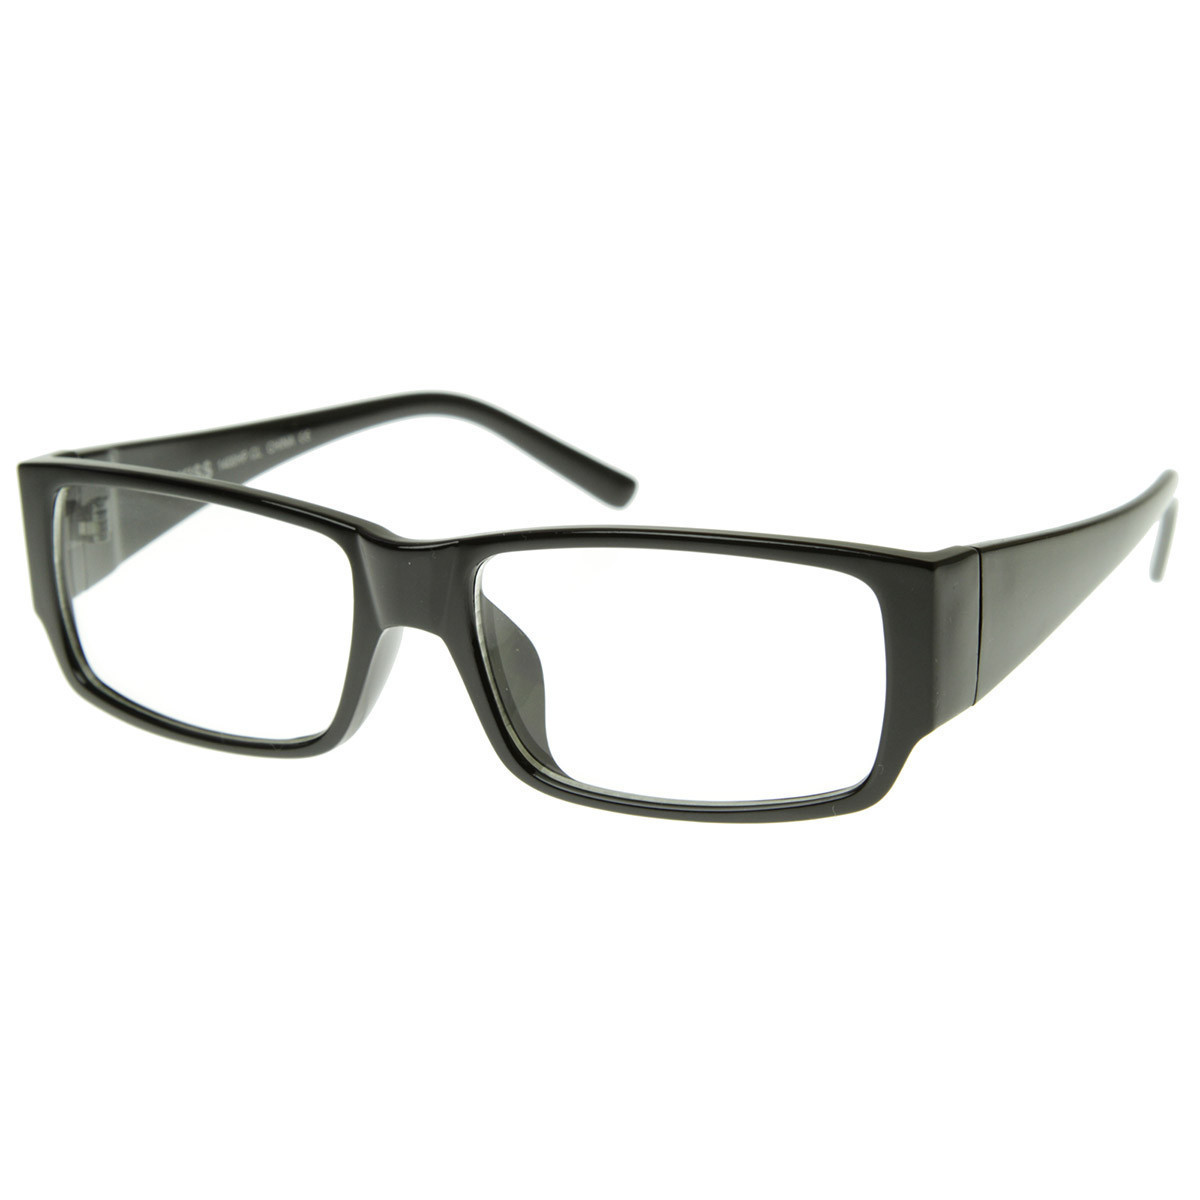 Modern Clean & Basic Rectangular Reading RX-able Clear Lens Eyewear Glasses - 8035 - Tortoise